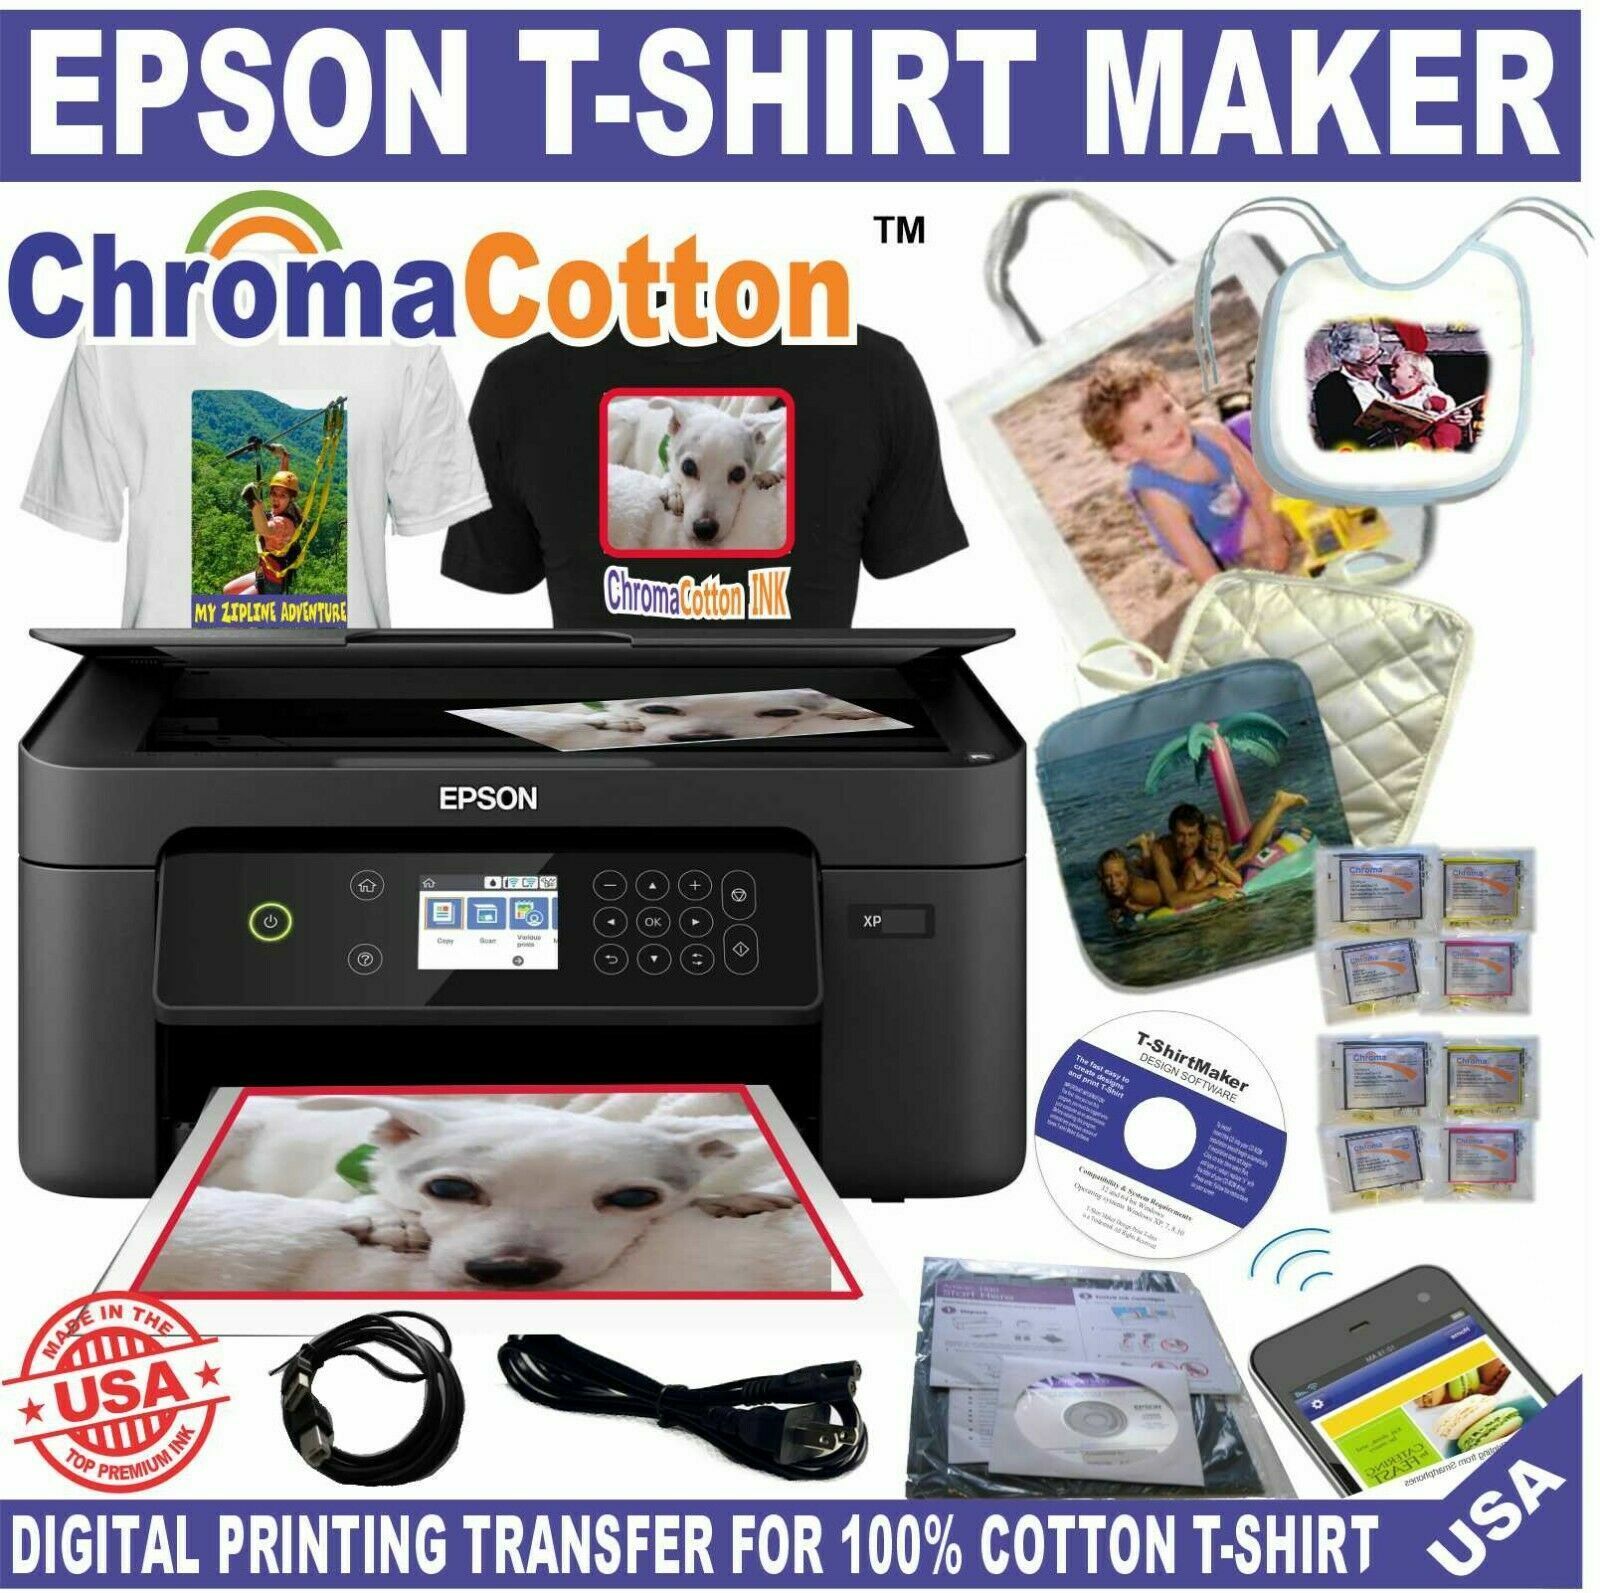 EPSON PRINTER Small One Printer COMPLETE KIT COTTON PRINT T-SHIRT MAKER Bundle.